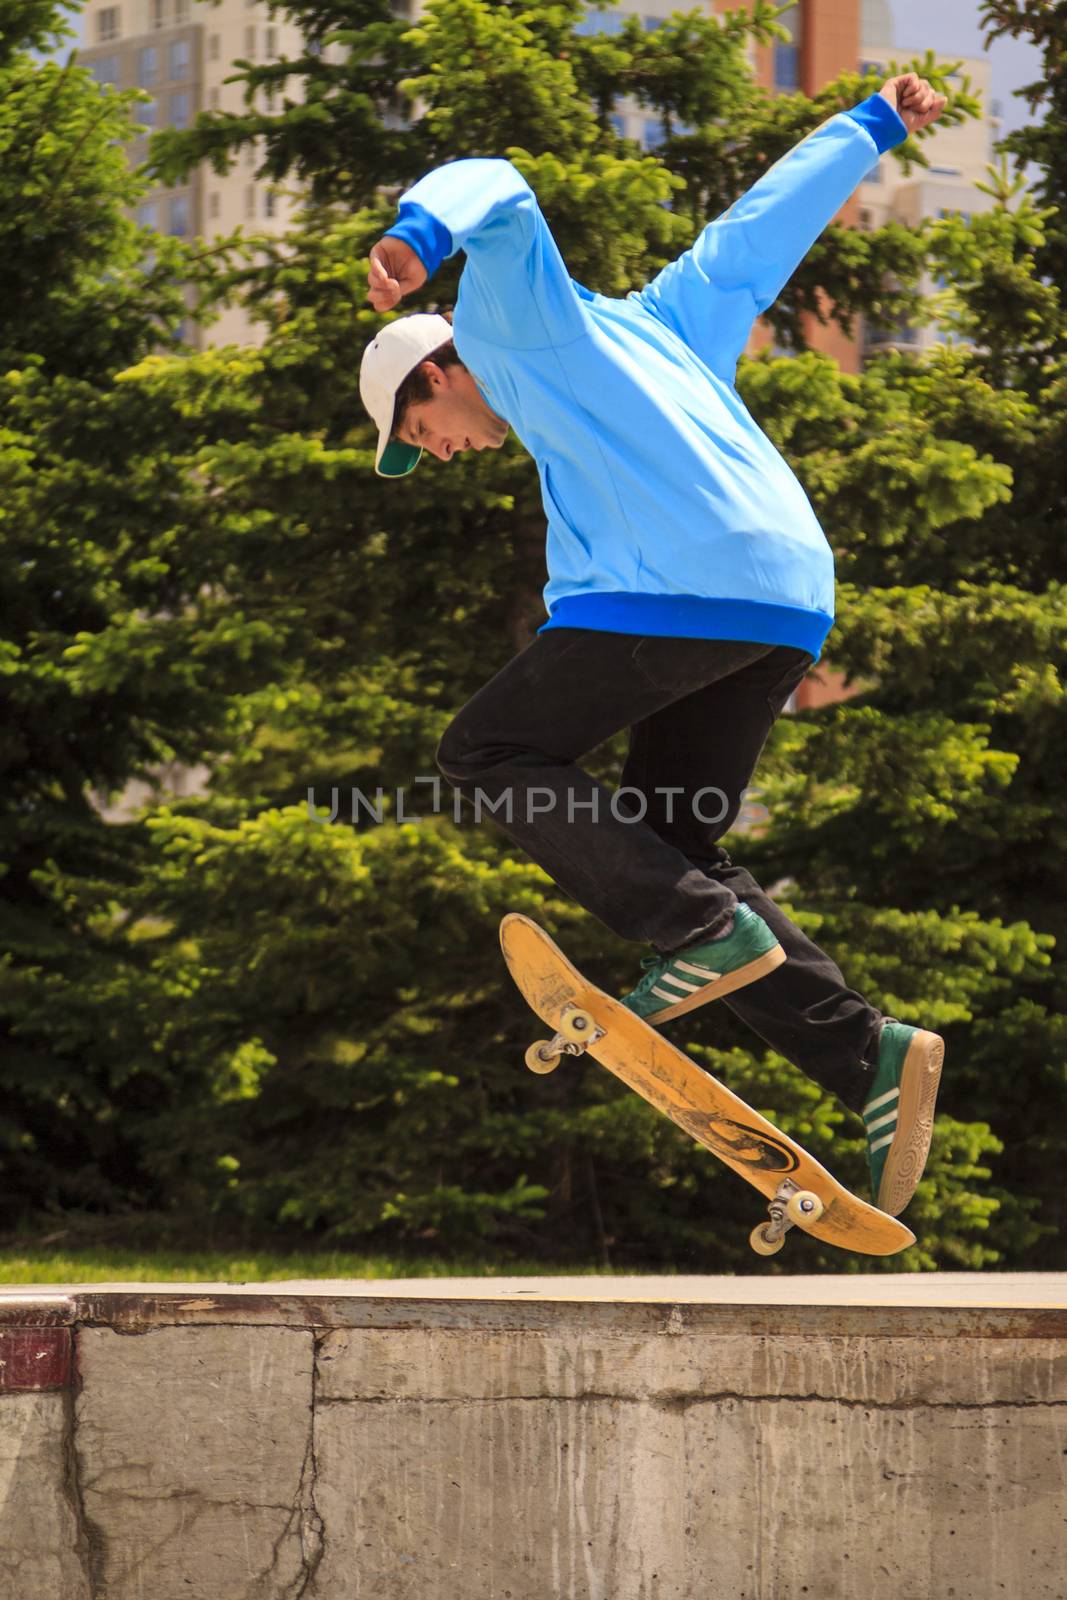 Skateboarding by Imagecom